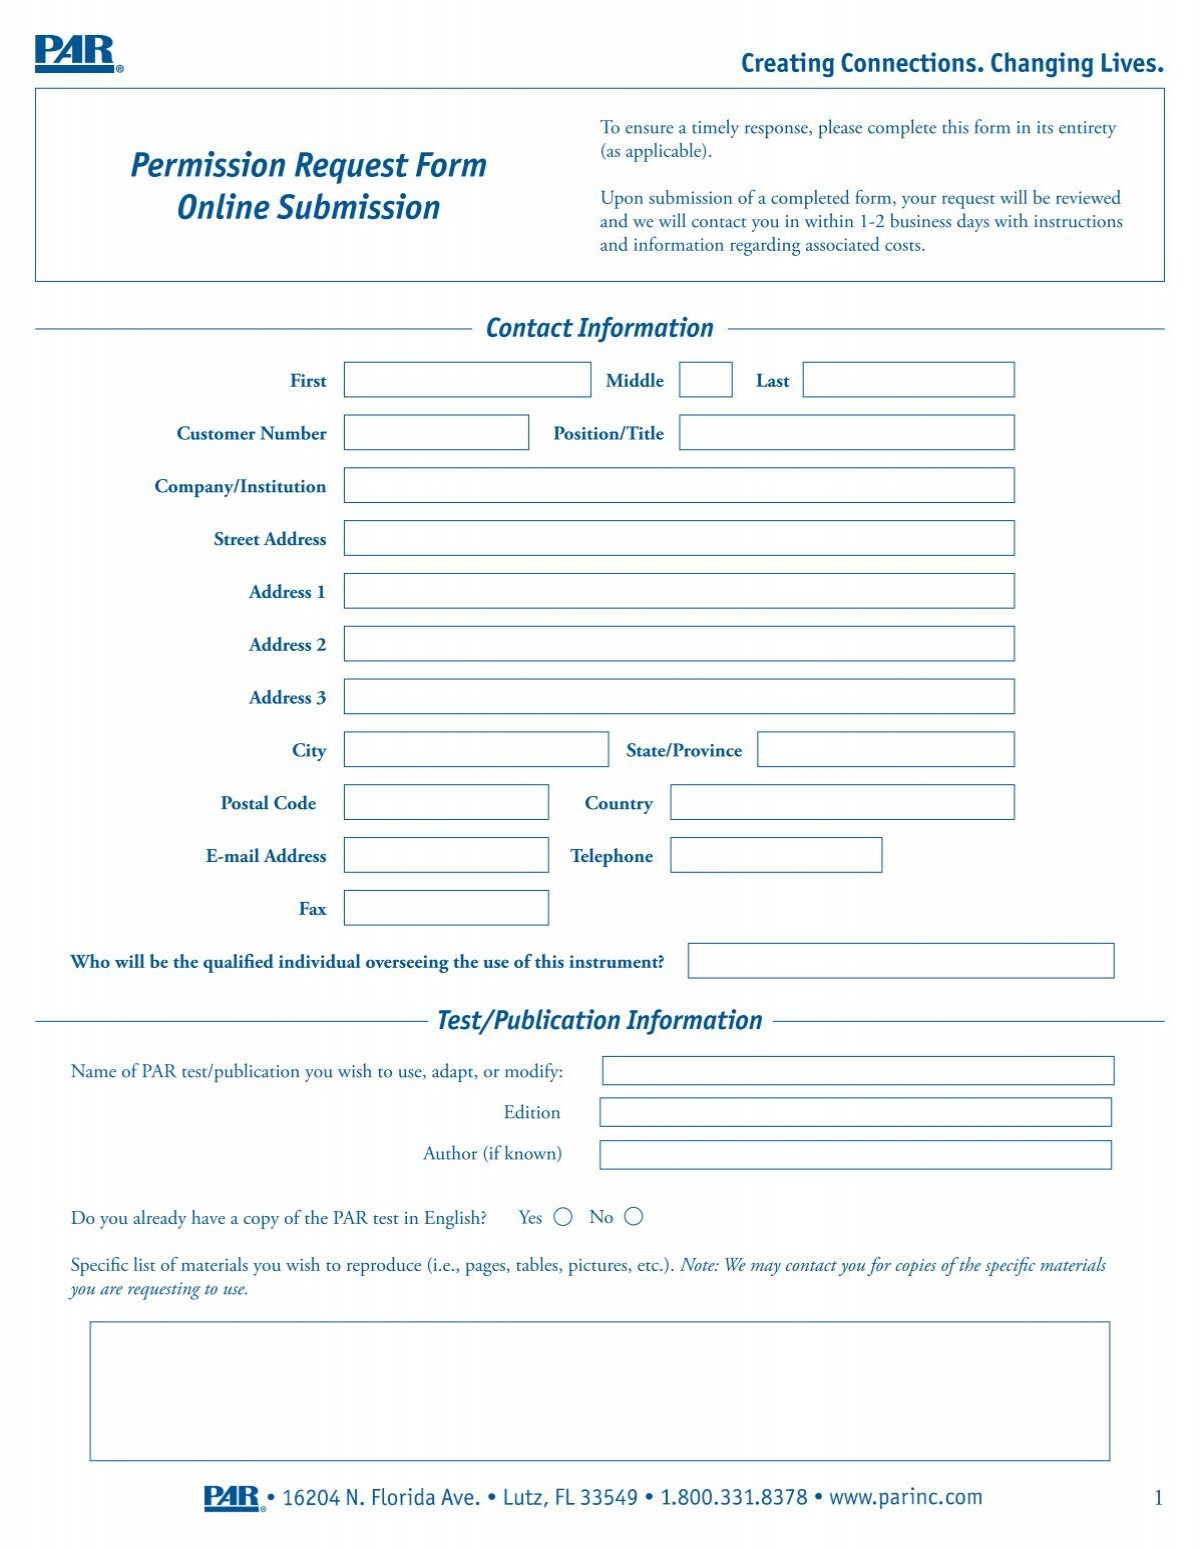 permission-request-form-online-submission